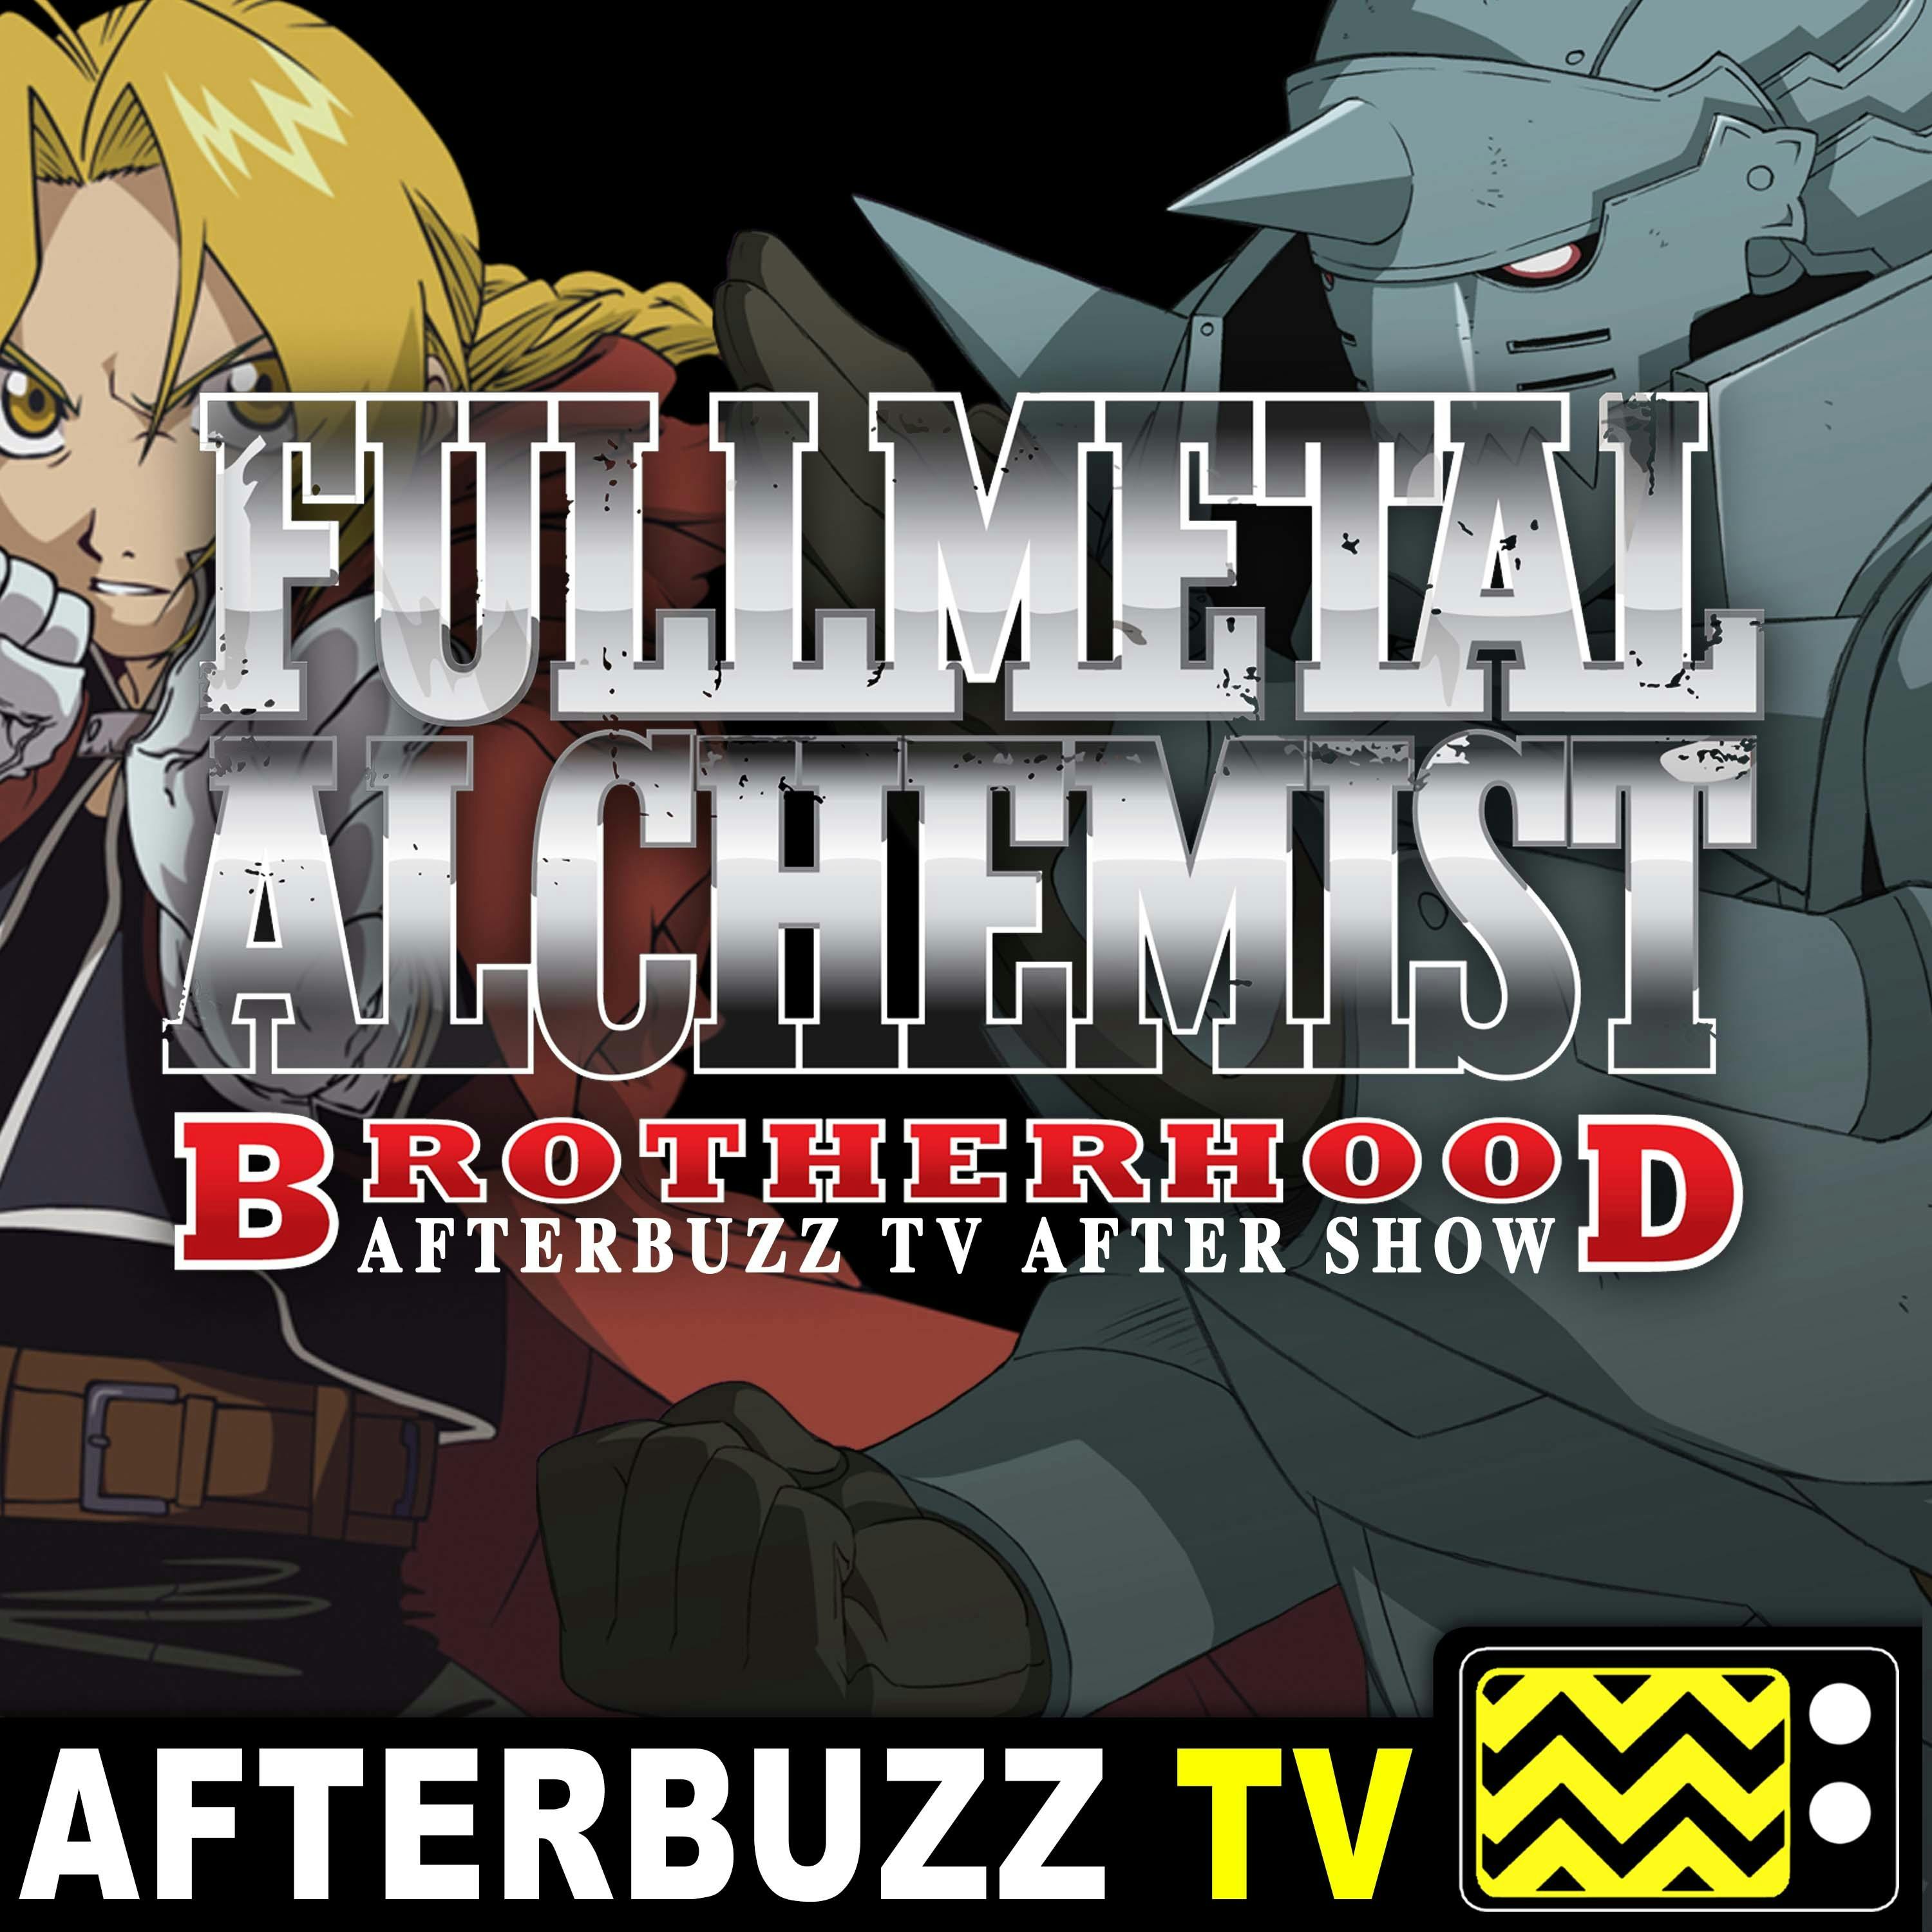 Fullmetal Alchemist: Brotherhood S:2 | Episodes 5 – 8 | AfterBuzz TV AfterShow